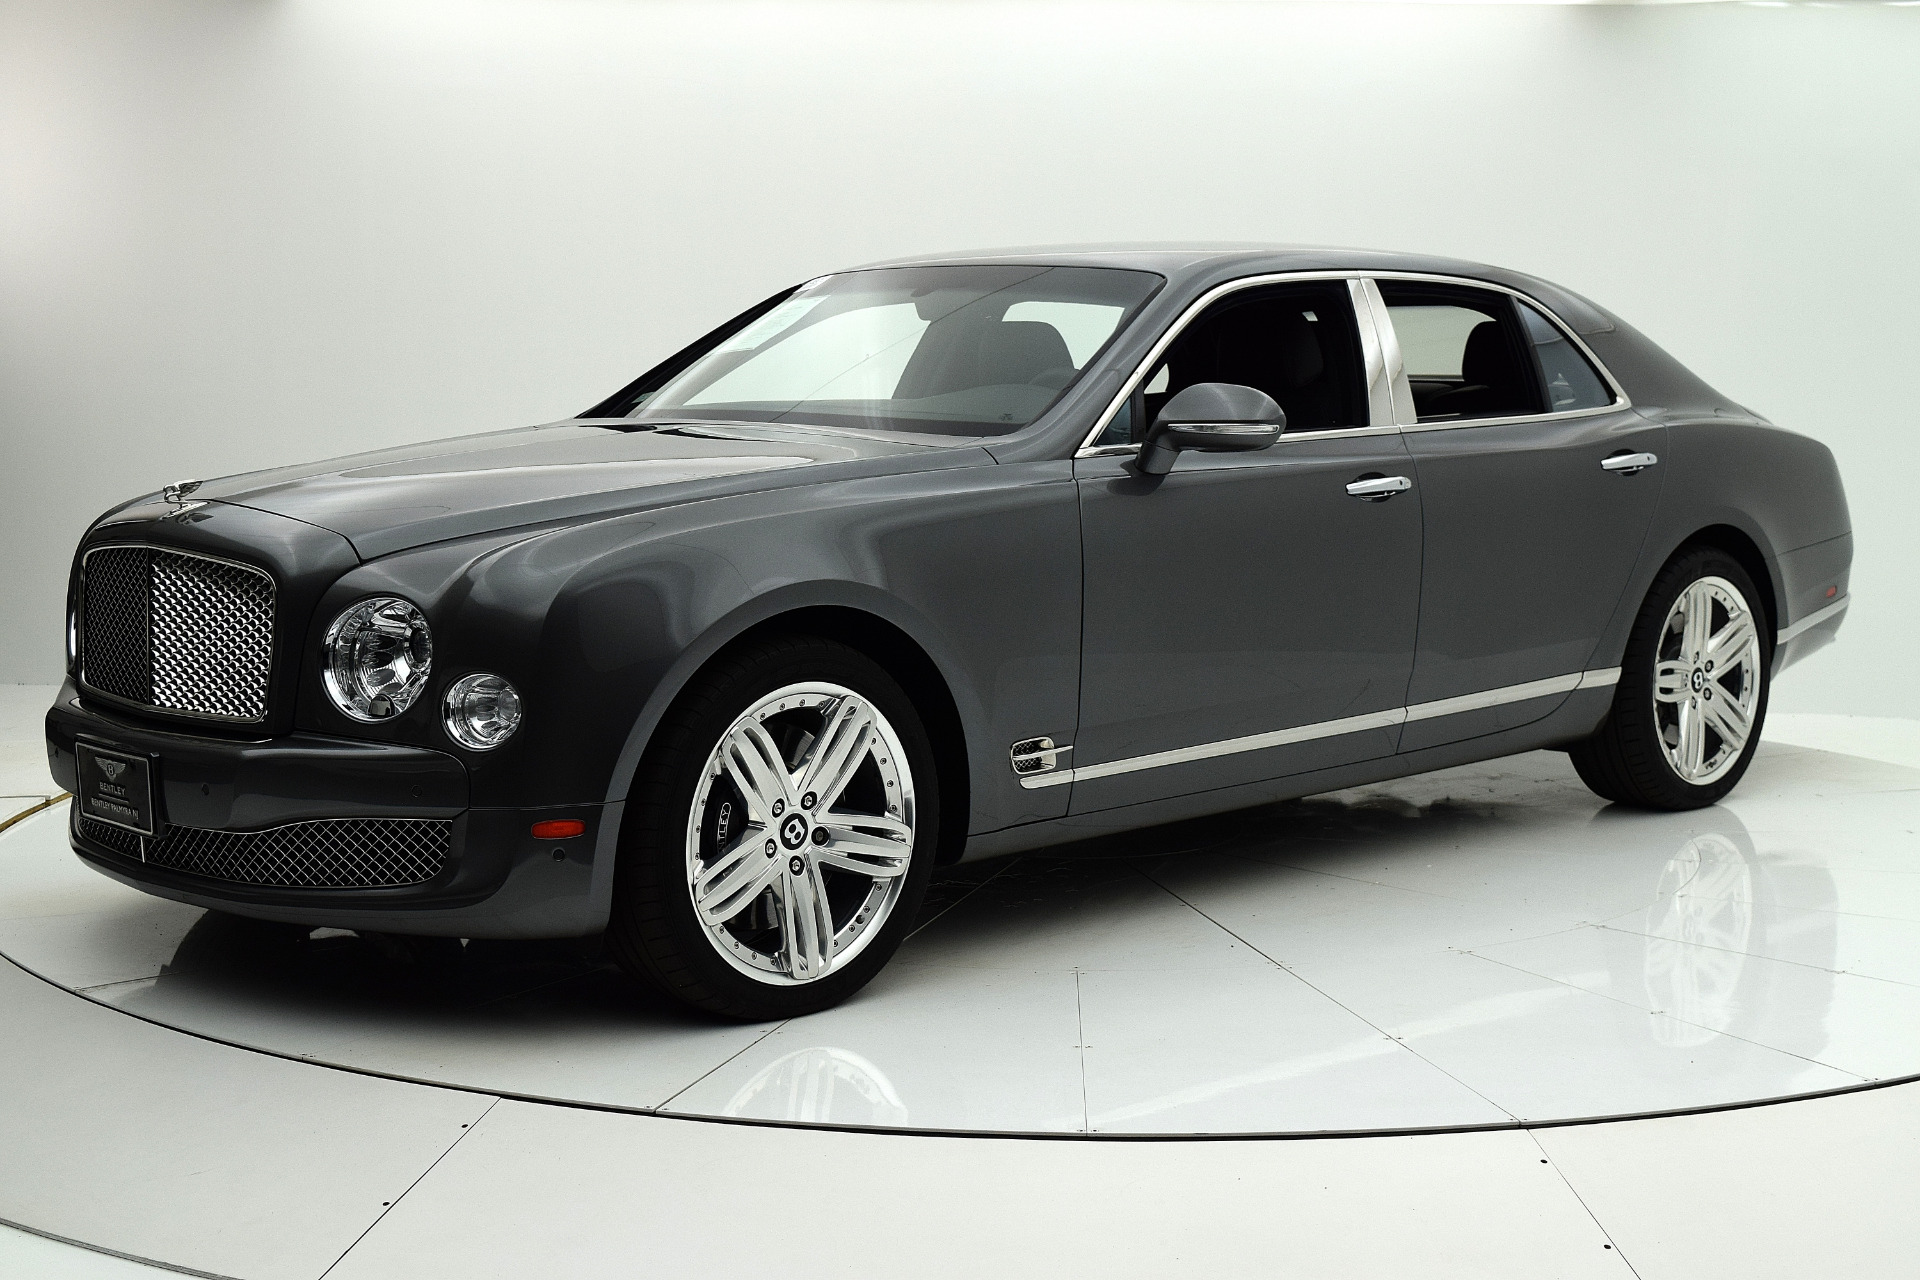 Used 2012 Bentley Mulsanne for sale Sold at Bentley Palmyra N.J. in Palmyra NJ 08065 2